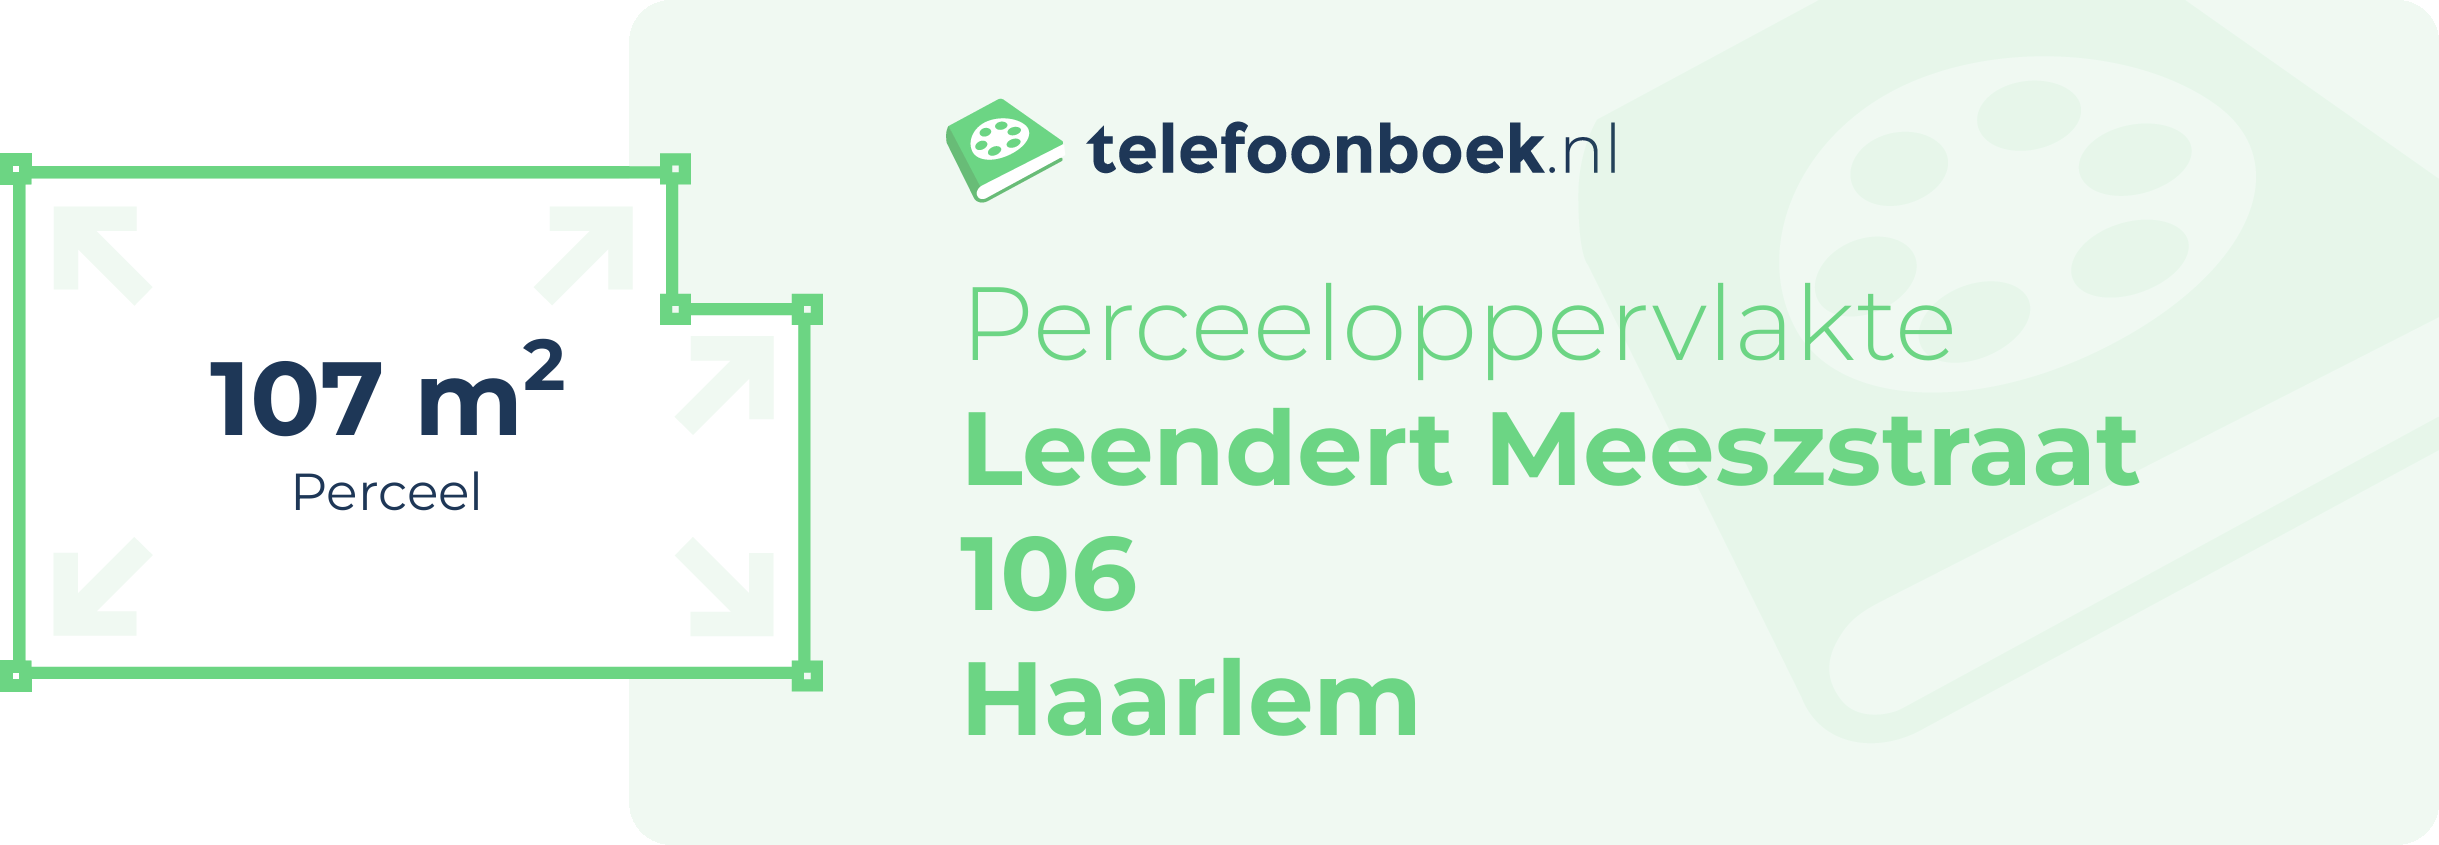 Perceeloppervlakte Leendert Meeszstraat 106 Haarlem